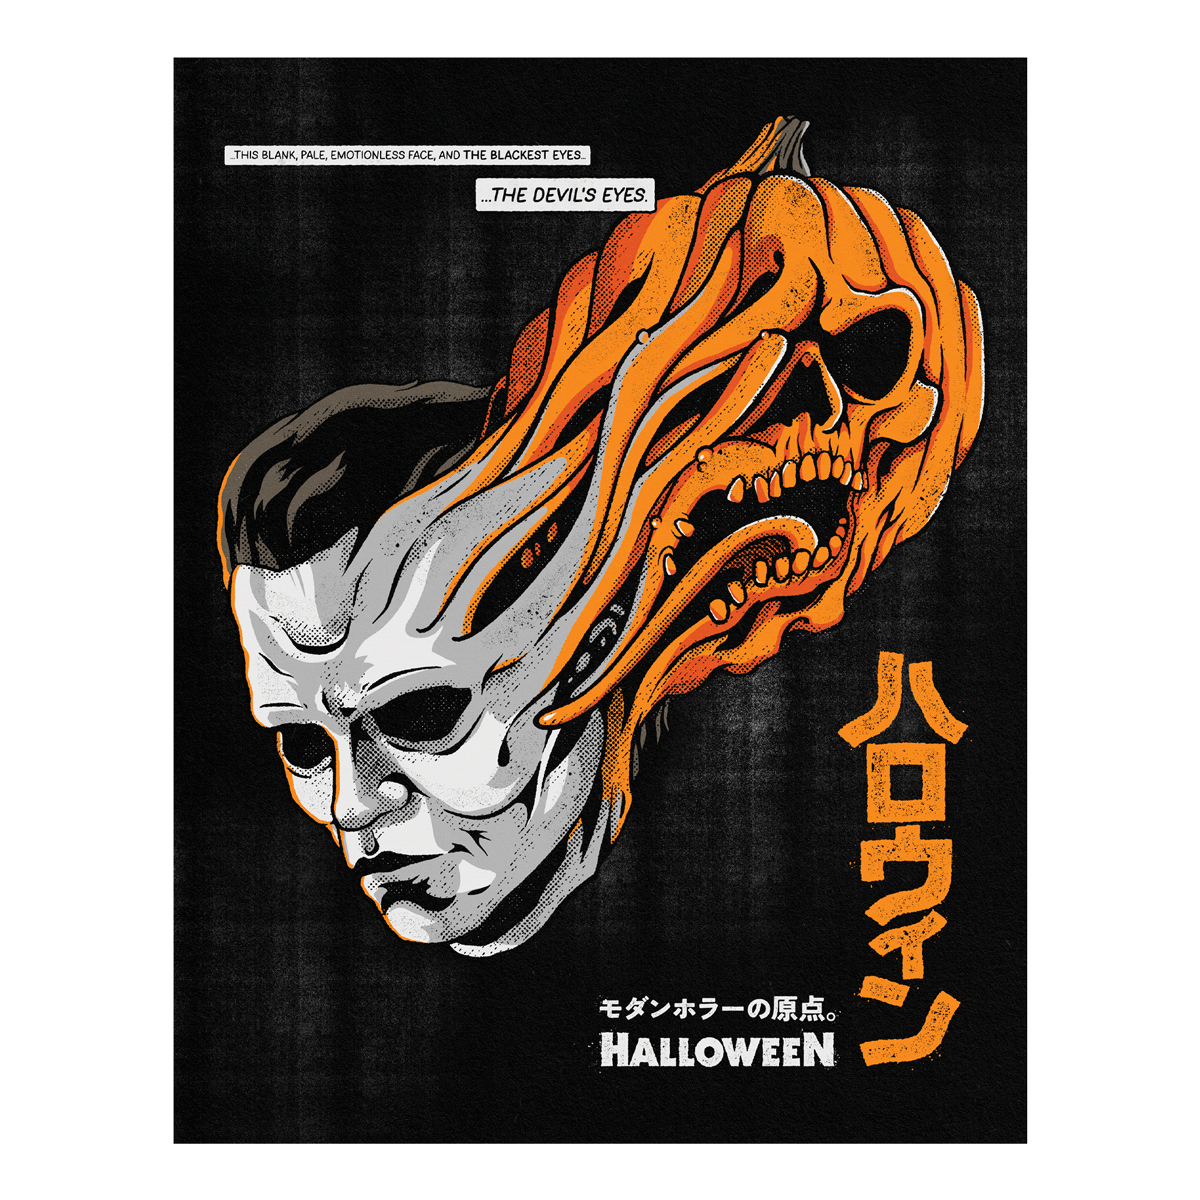 Split-faced Halloween 11"x14" Print